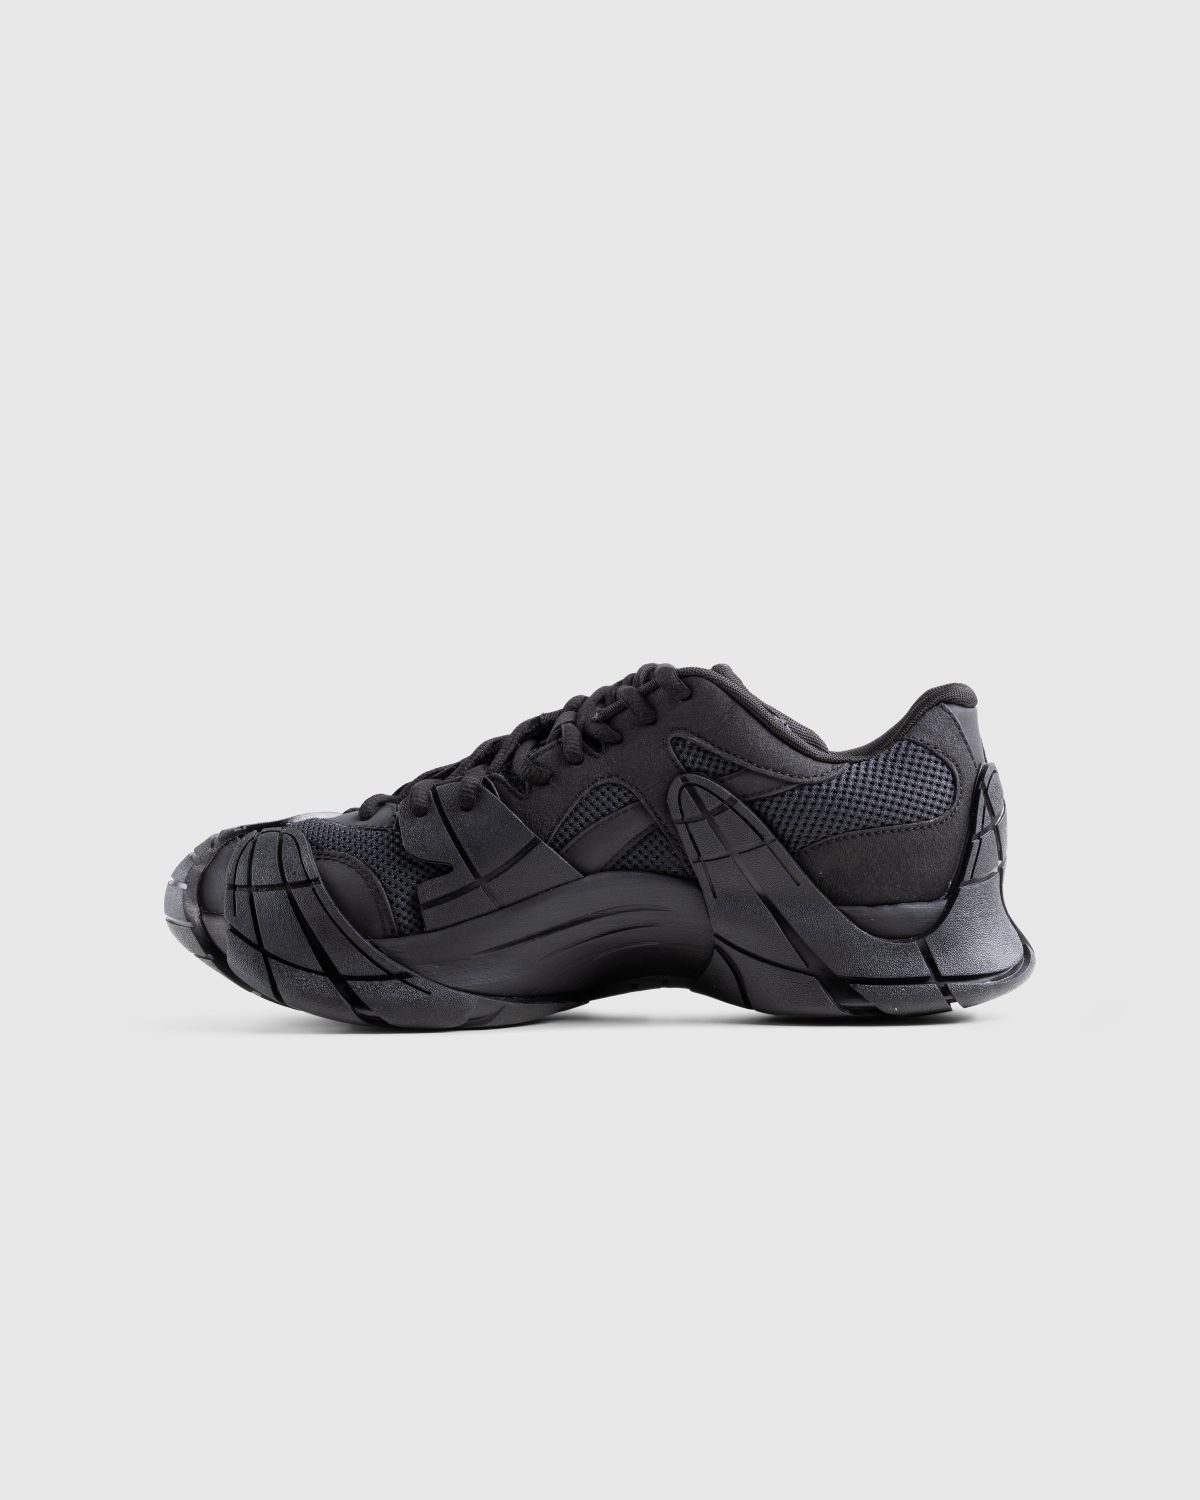 CAMPERLAB – Tormenta Black - Low Top Sneakers - Black - Image 2